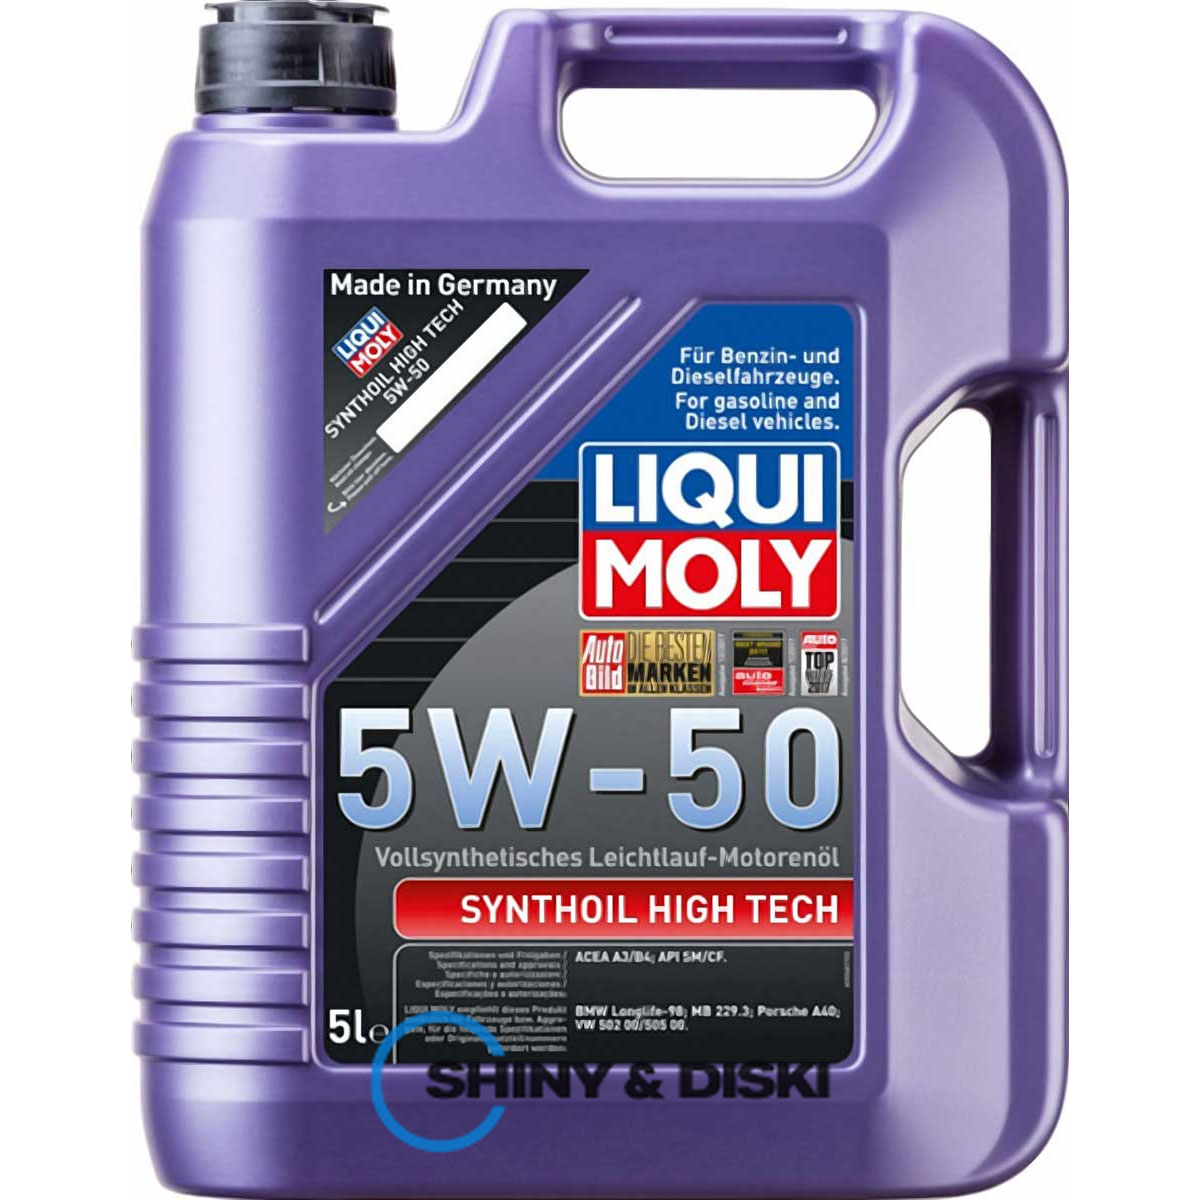 liqui moly synthoil high tech 5w-50 (5л)